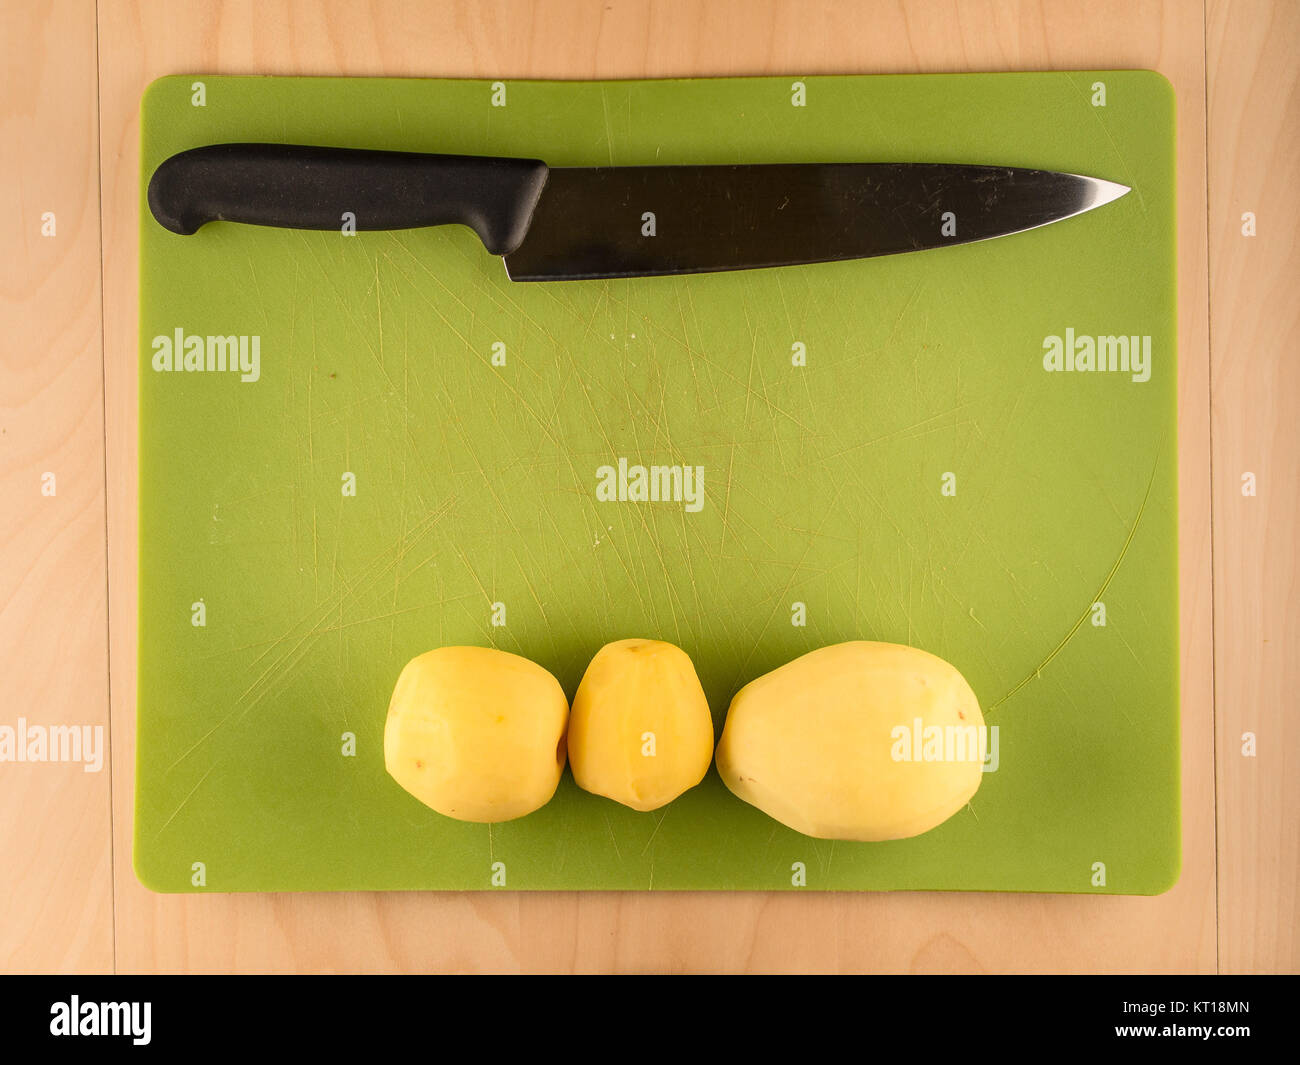 https://c8.alamy.com/comp/KT18MN/three-potatoes-and-knife-on-green-plastic-board-KT18MN.jpg